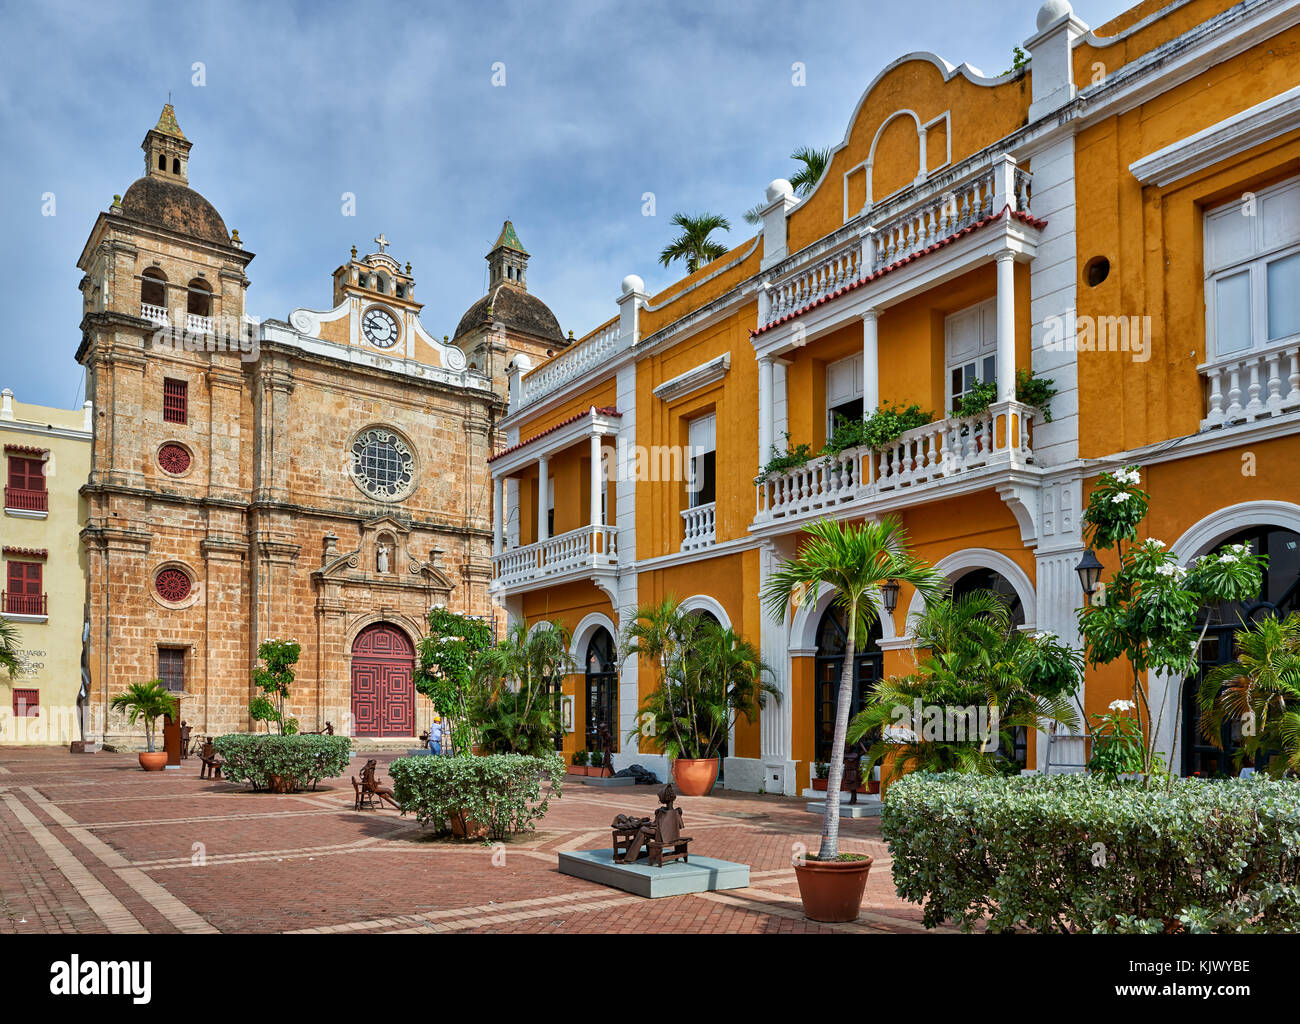 La Iglesia de San Pedro Claver, Cartagena de Indias, Colombia, Sud America Foto Stock